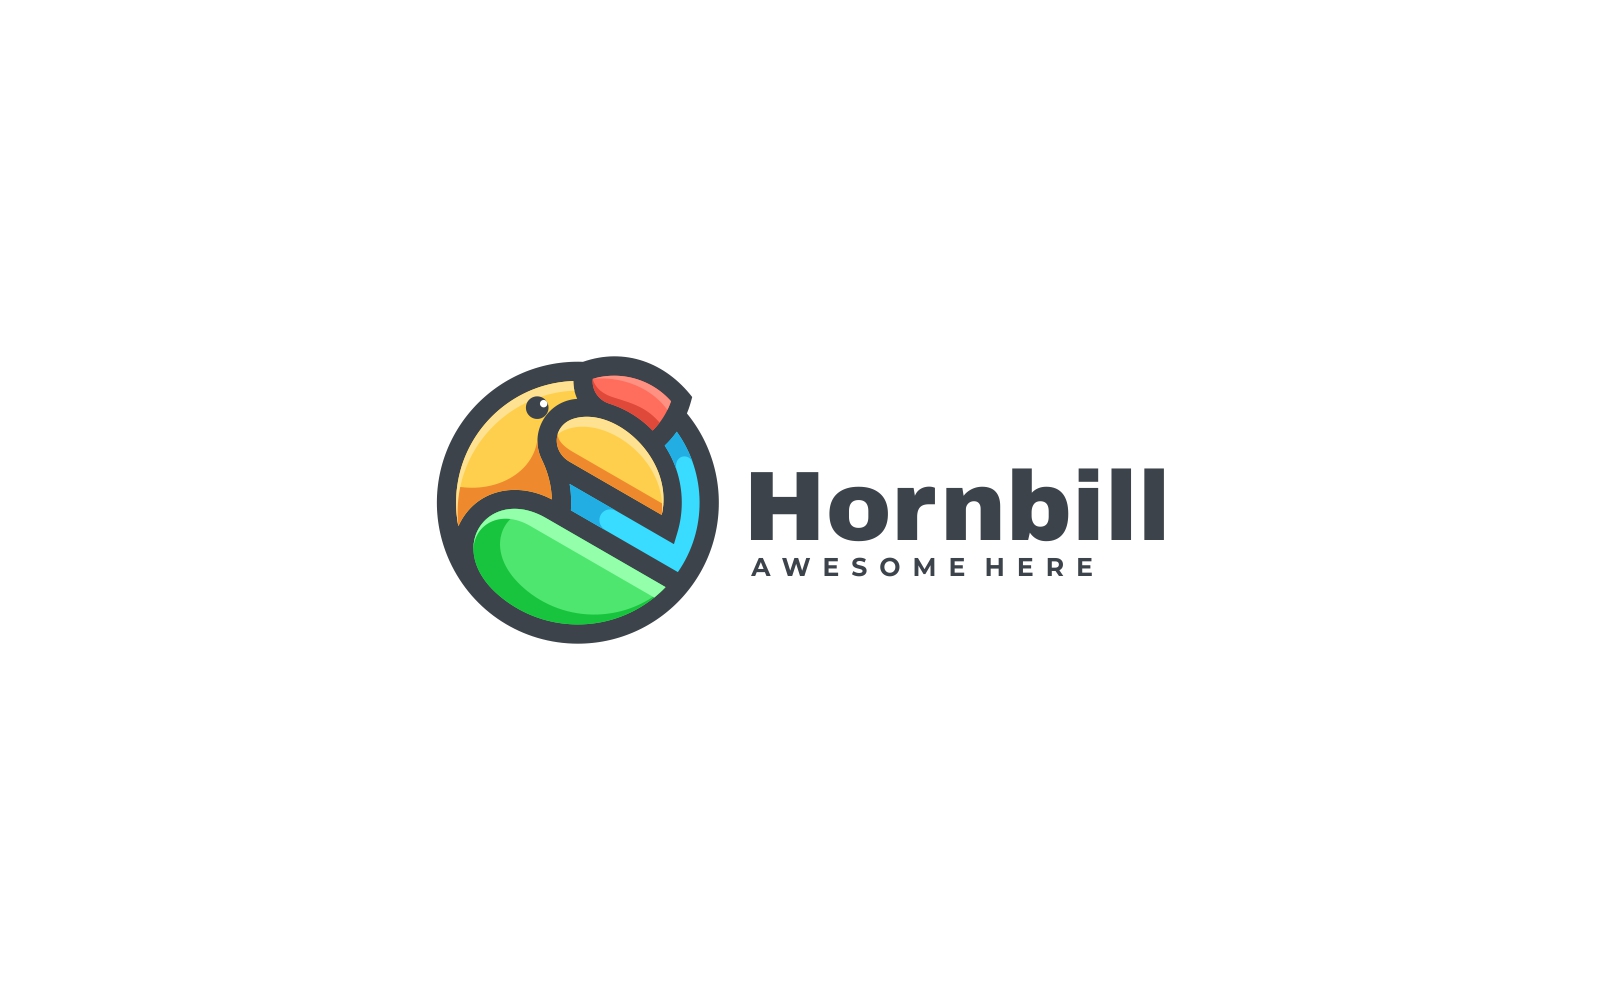 Hornbill Logo Images, HD Pictures For Free Vectors Download - Lovepik.com